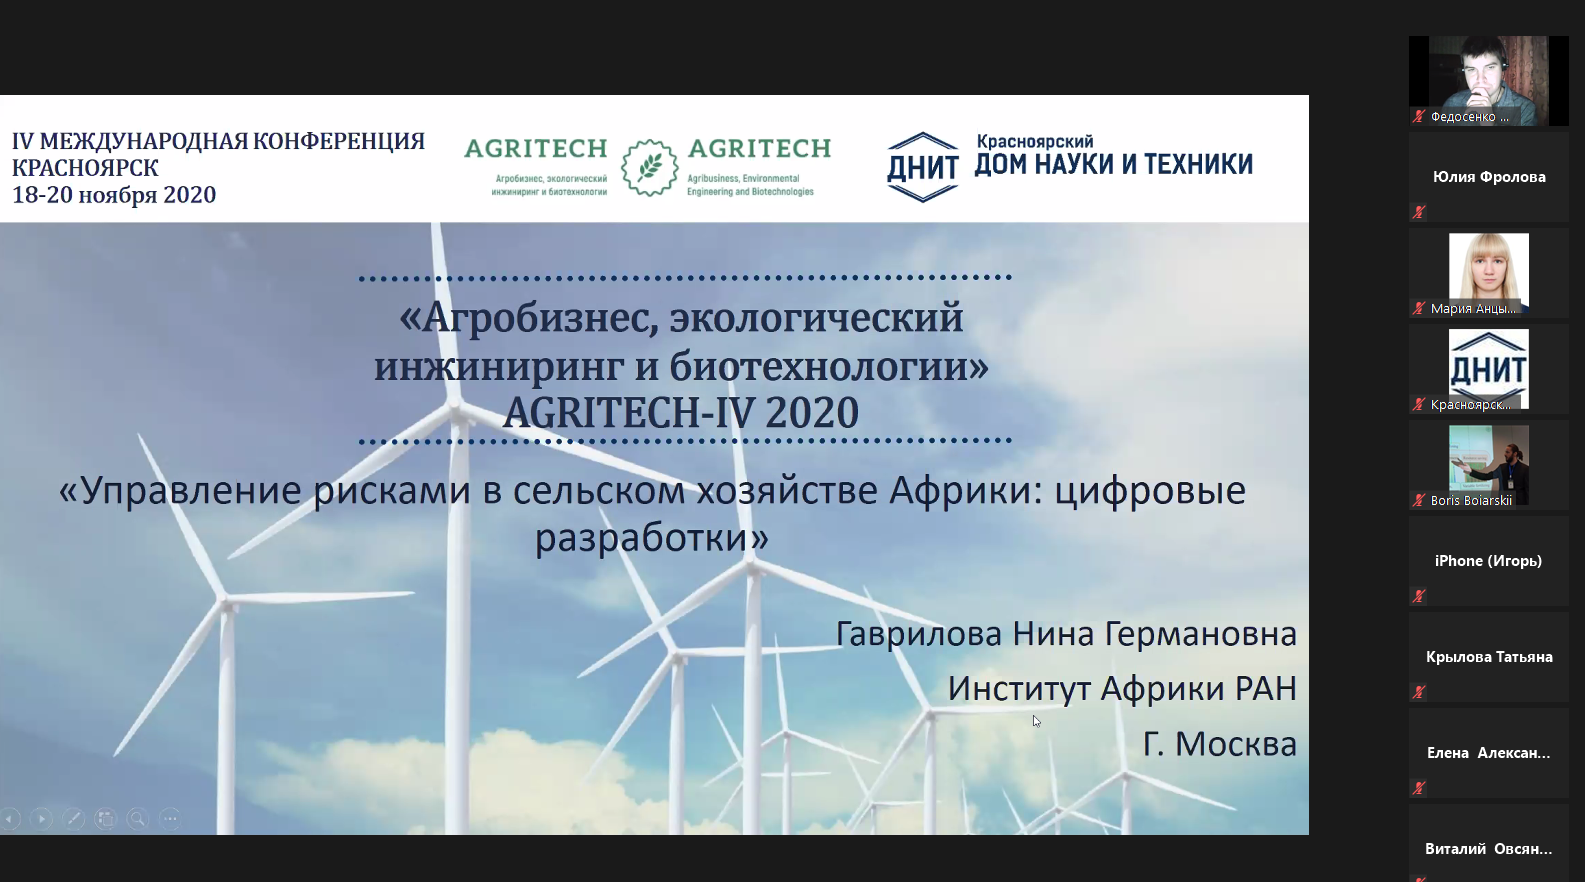 Agritech-IV 2020: прошла очная сессия